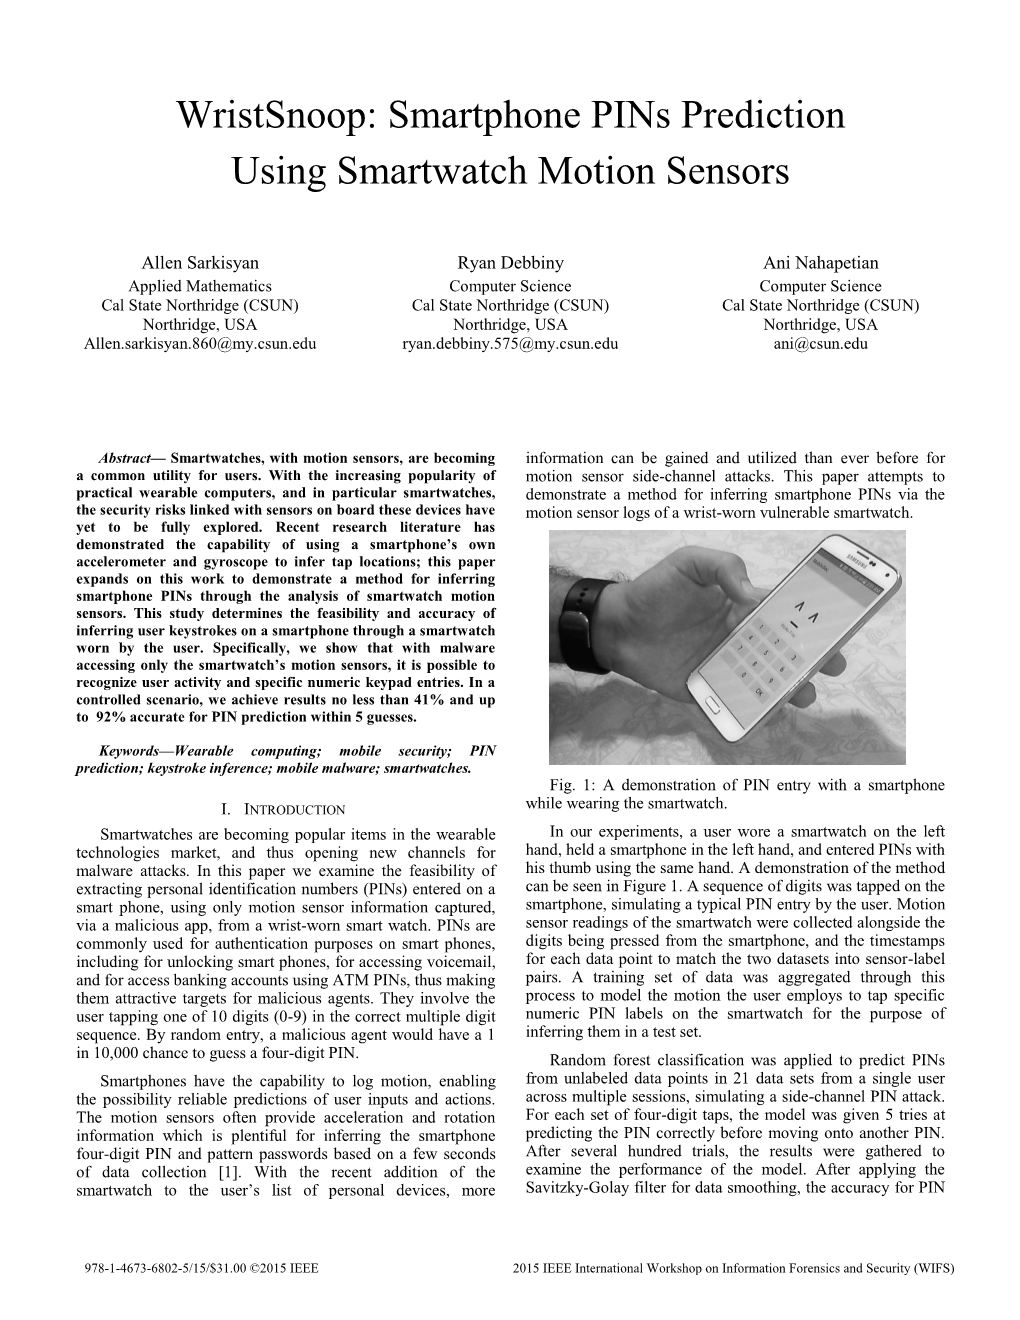 Smartphone Pins Prediction Using Smartwatch Motion Sensors